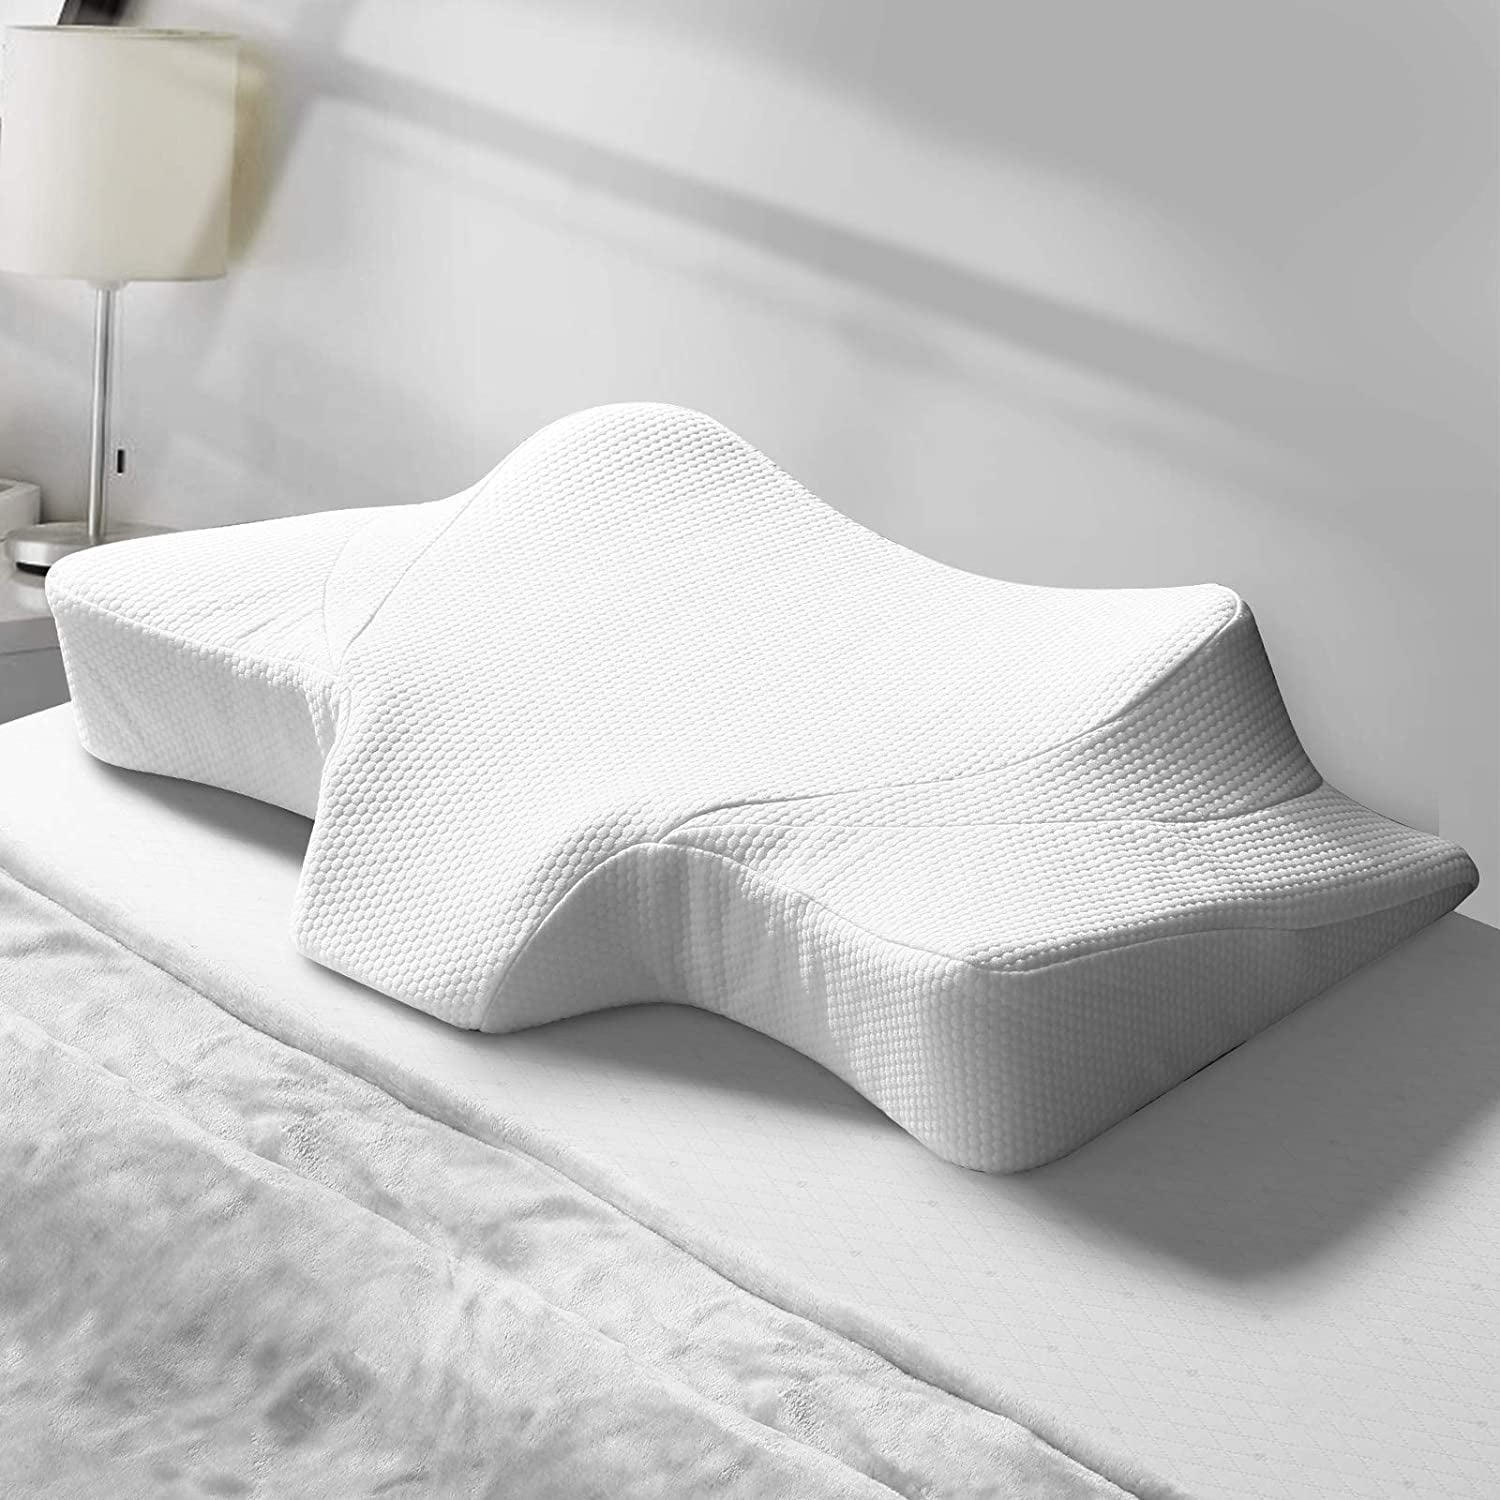 MARNUR Contour Memory Foam Pillow Orthopedic Pillows for Neck Pain Ergonomic 